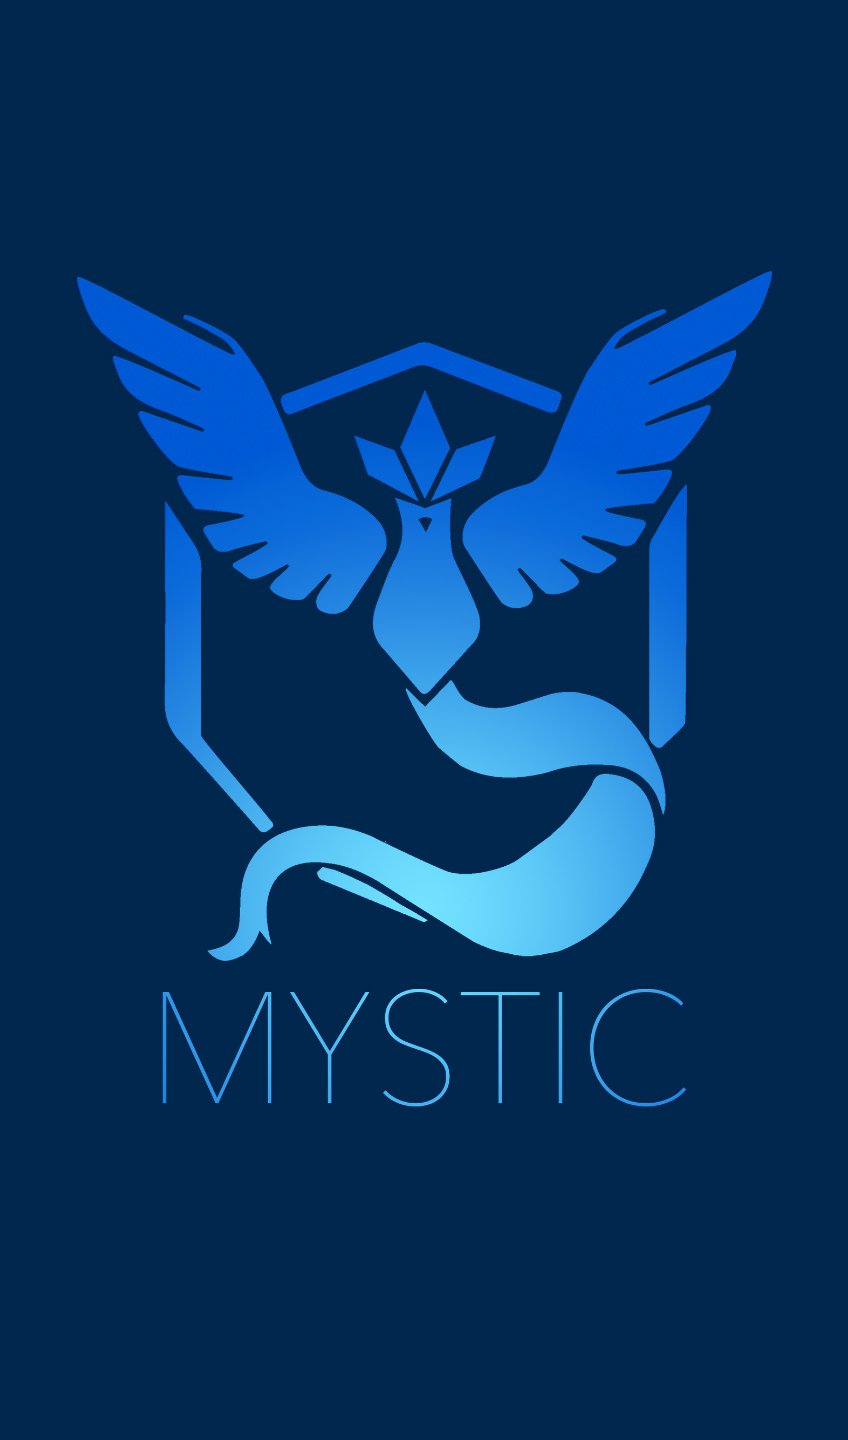 Team Mystic Pokemon Go Wallpaper Image